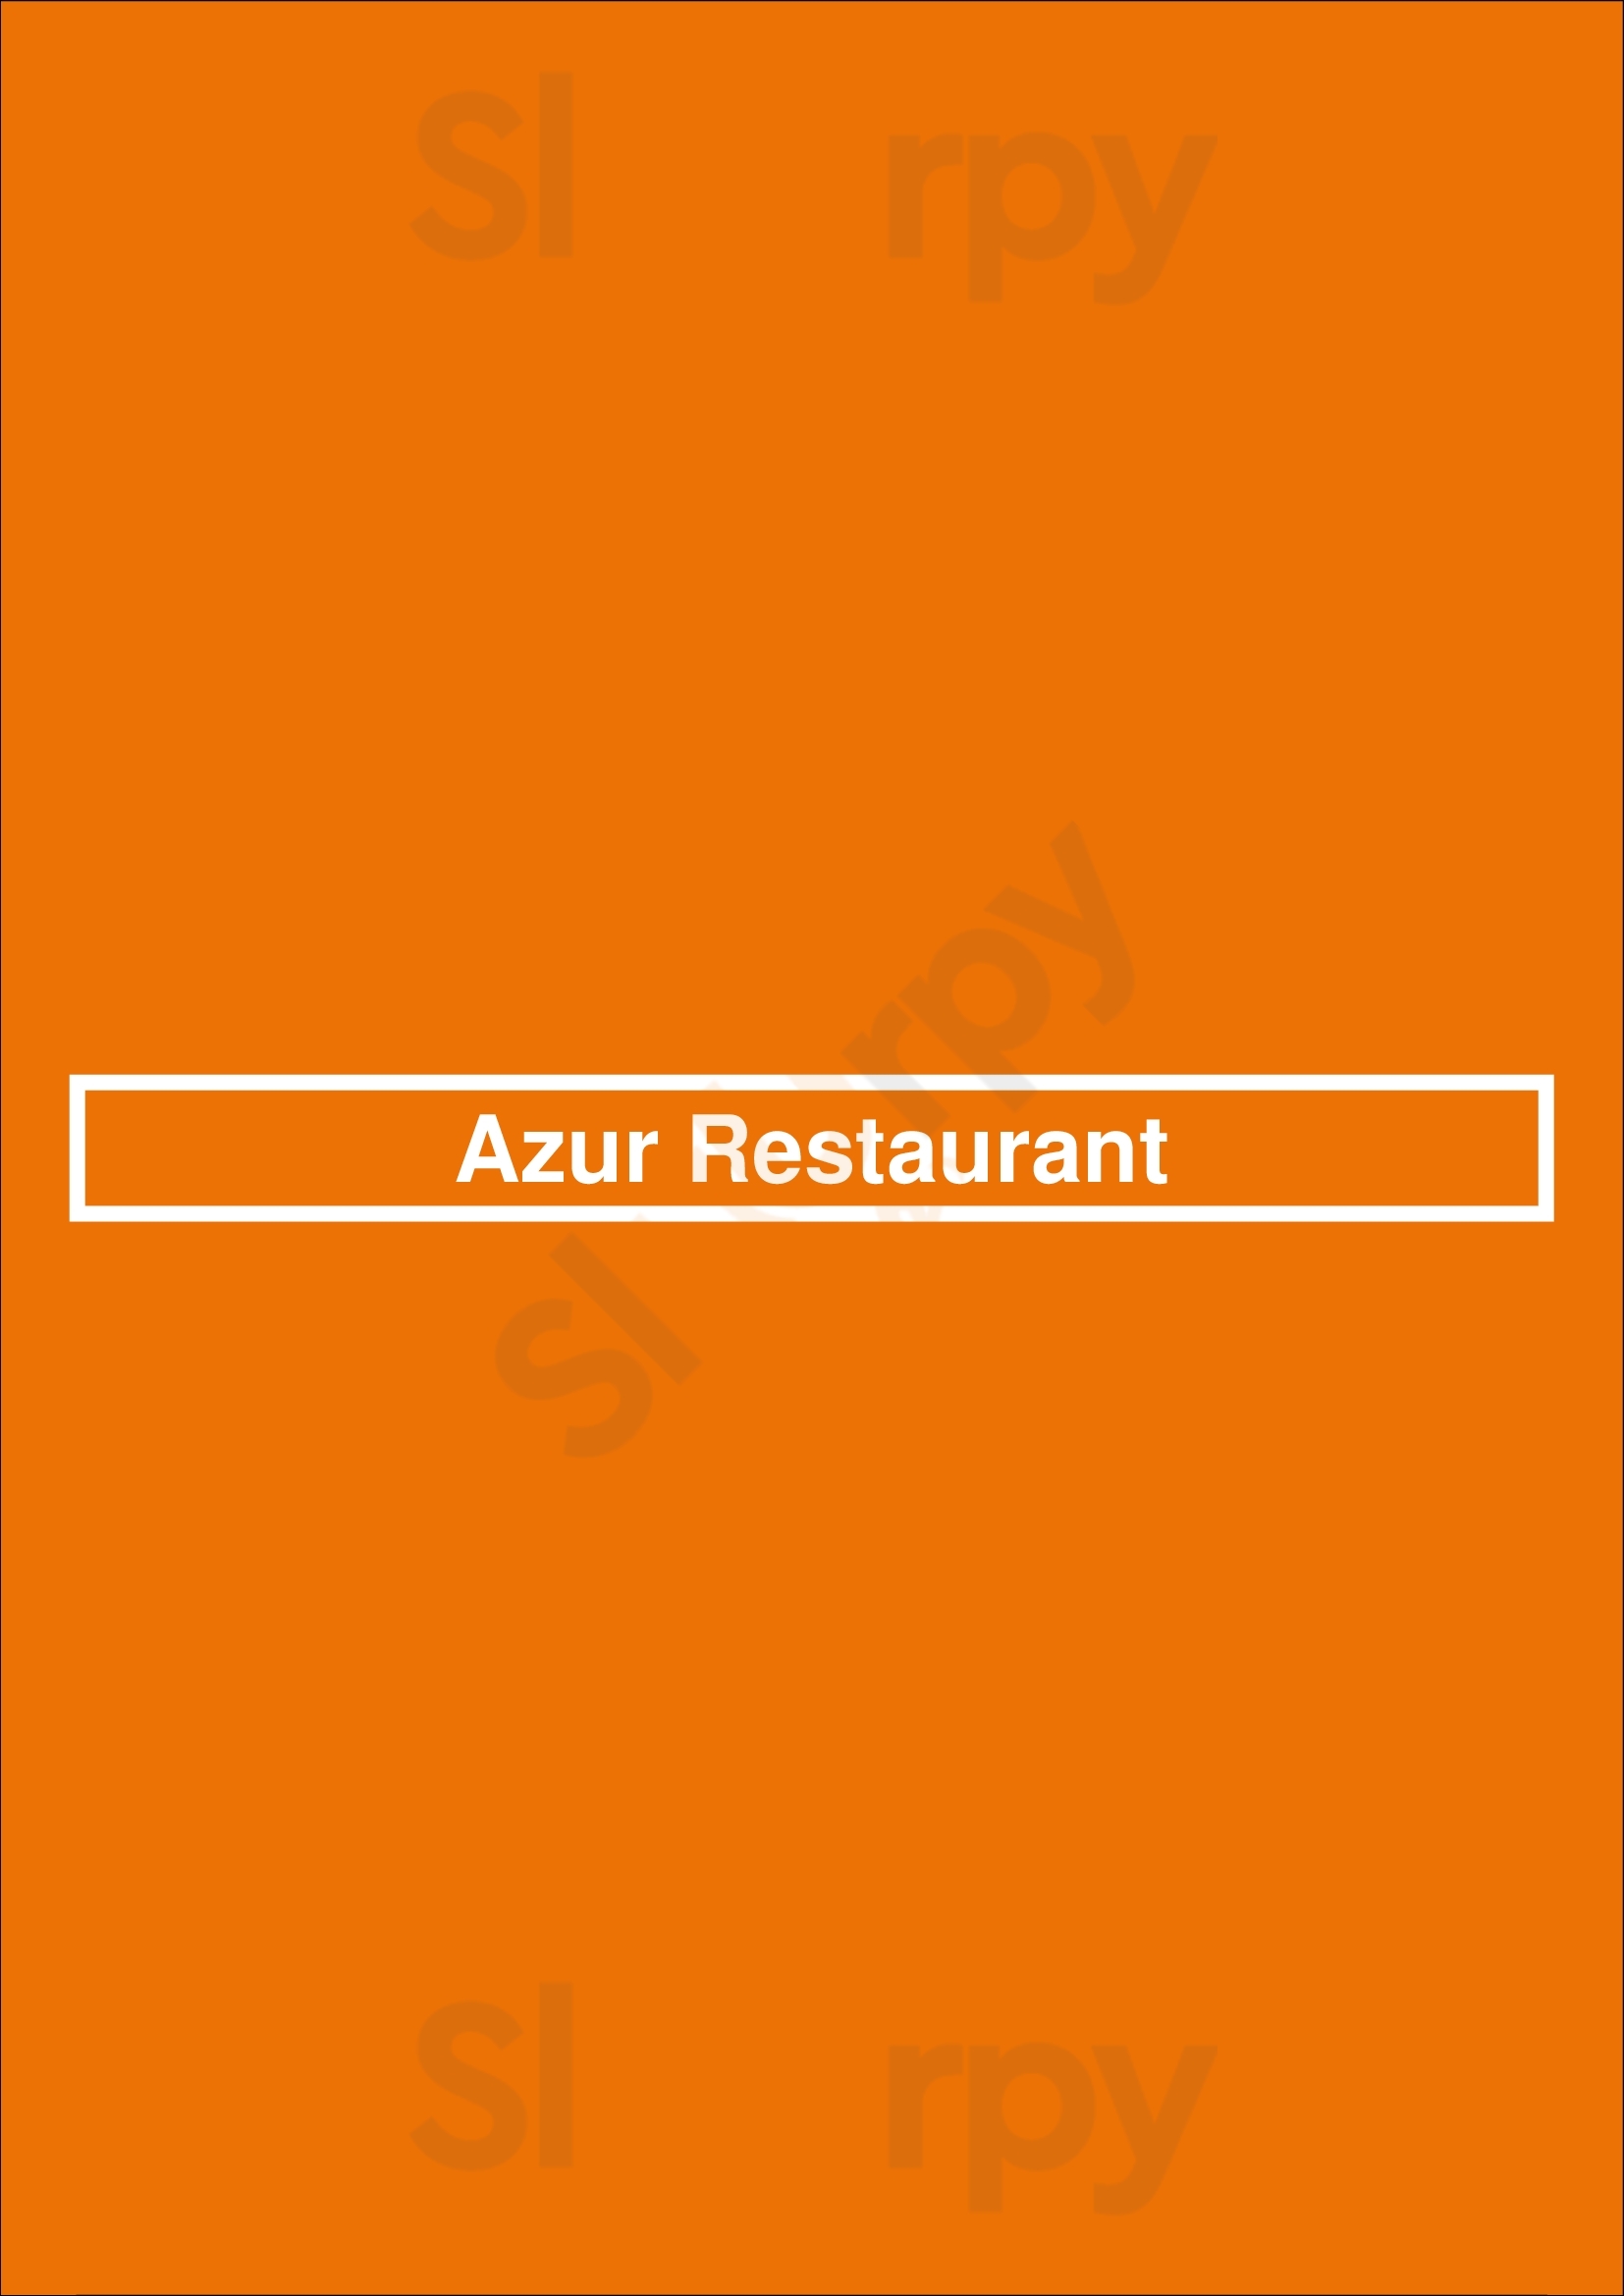 Azur Restaurant Key West Menu - 1